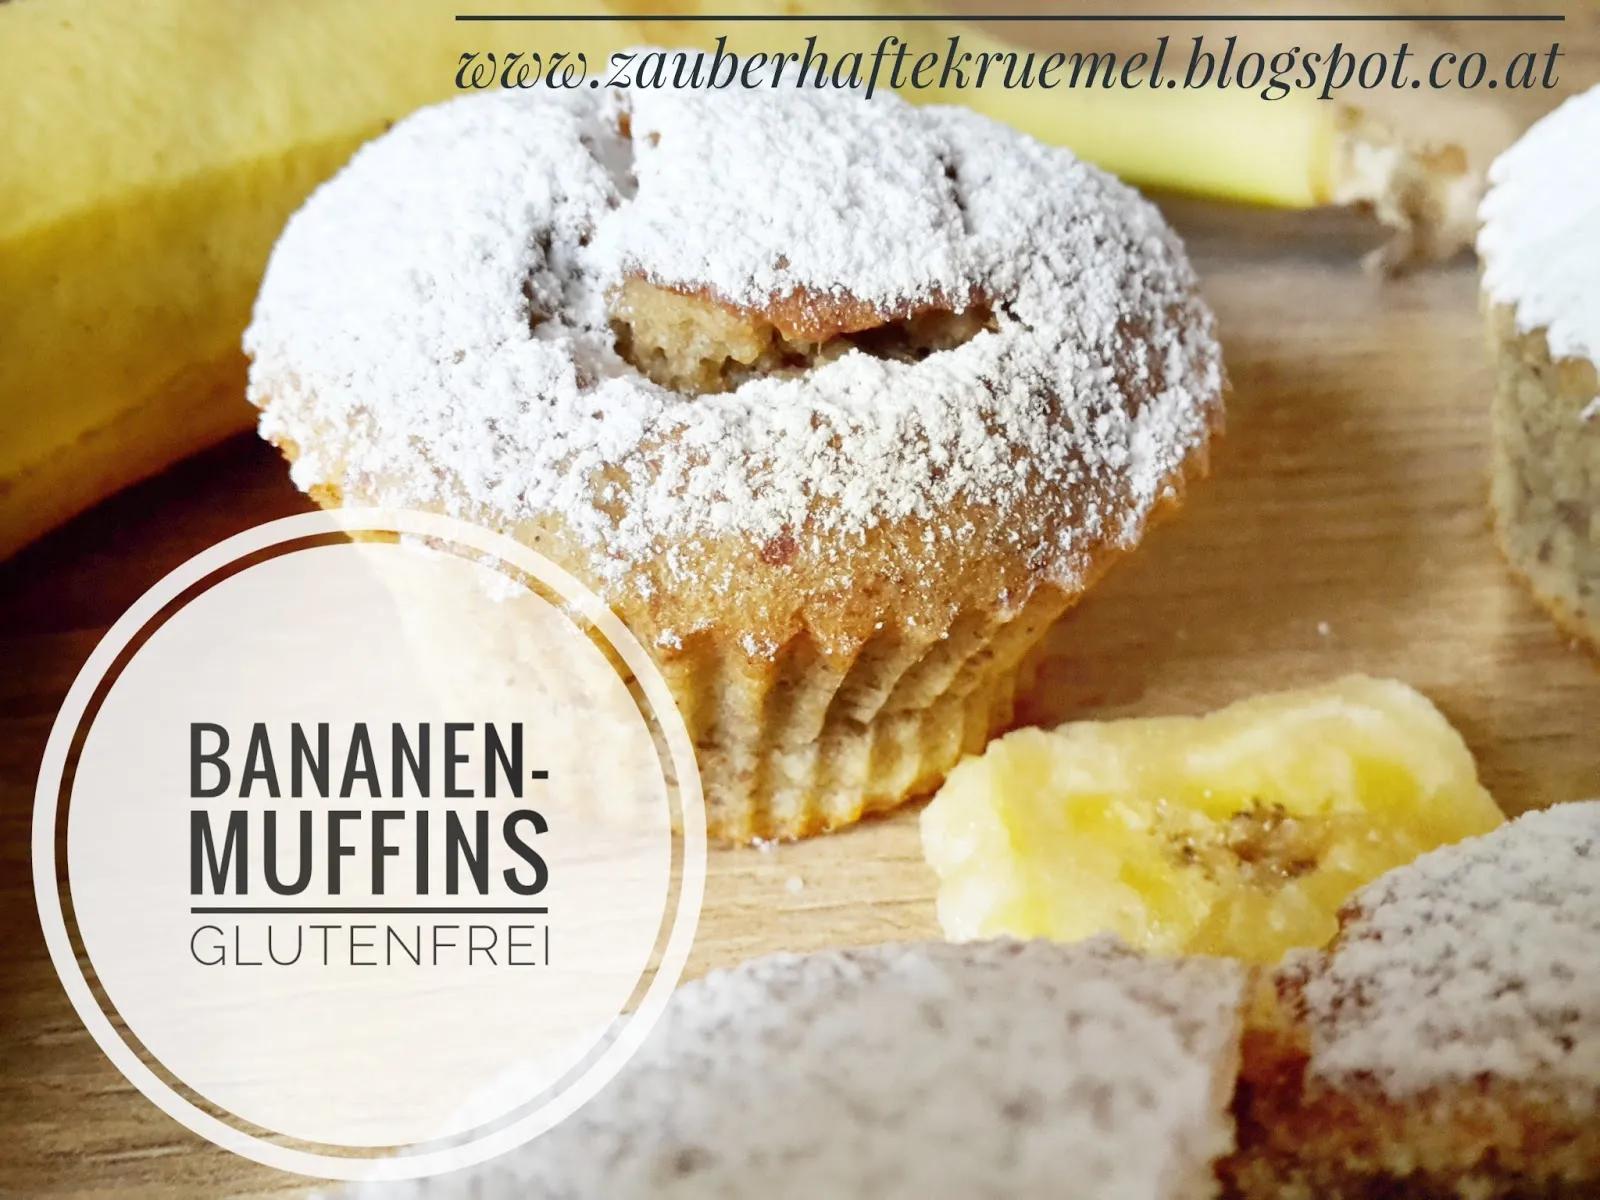 Zauberhafte Krümel: [Rezepte]: glutenfreie Bananenmuffins